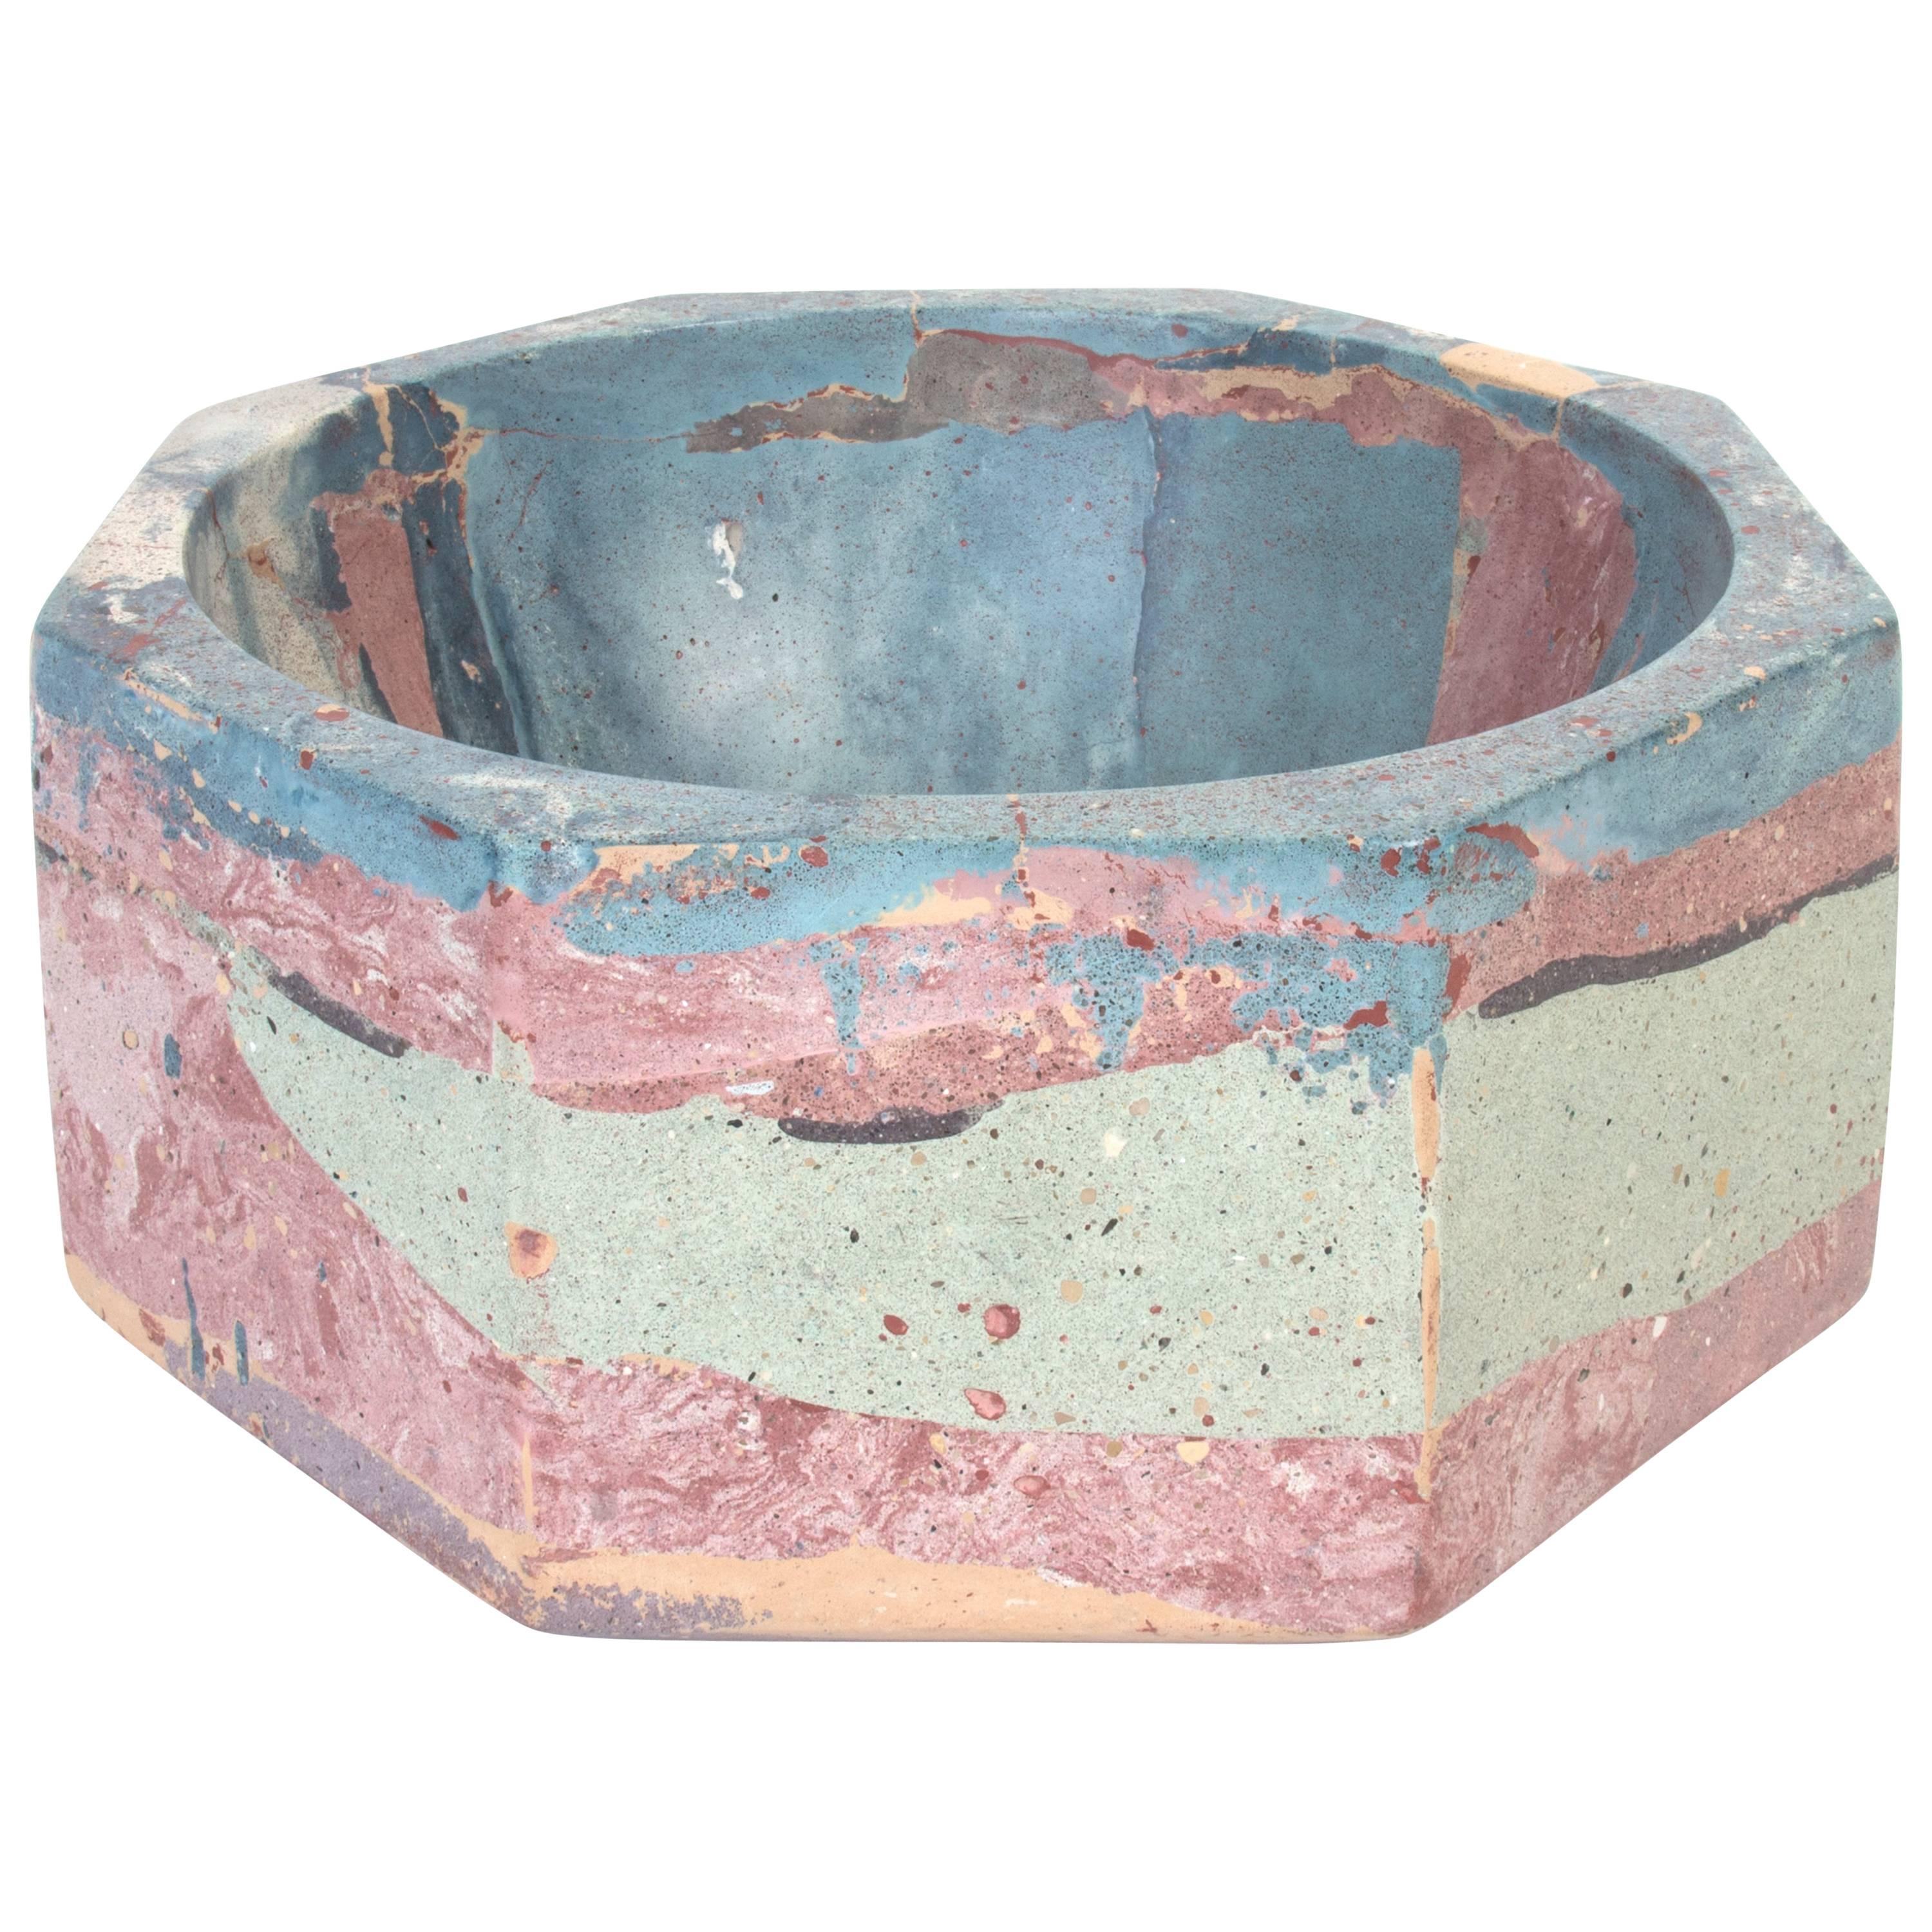 Octavia Max Concrete Bowl in Exclusive Detritus Pattern, Handmade Organic Modern im Angebot